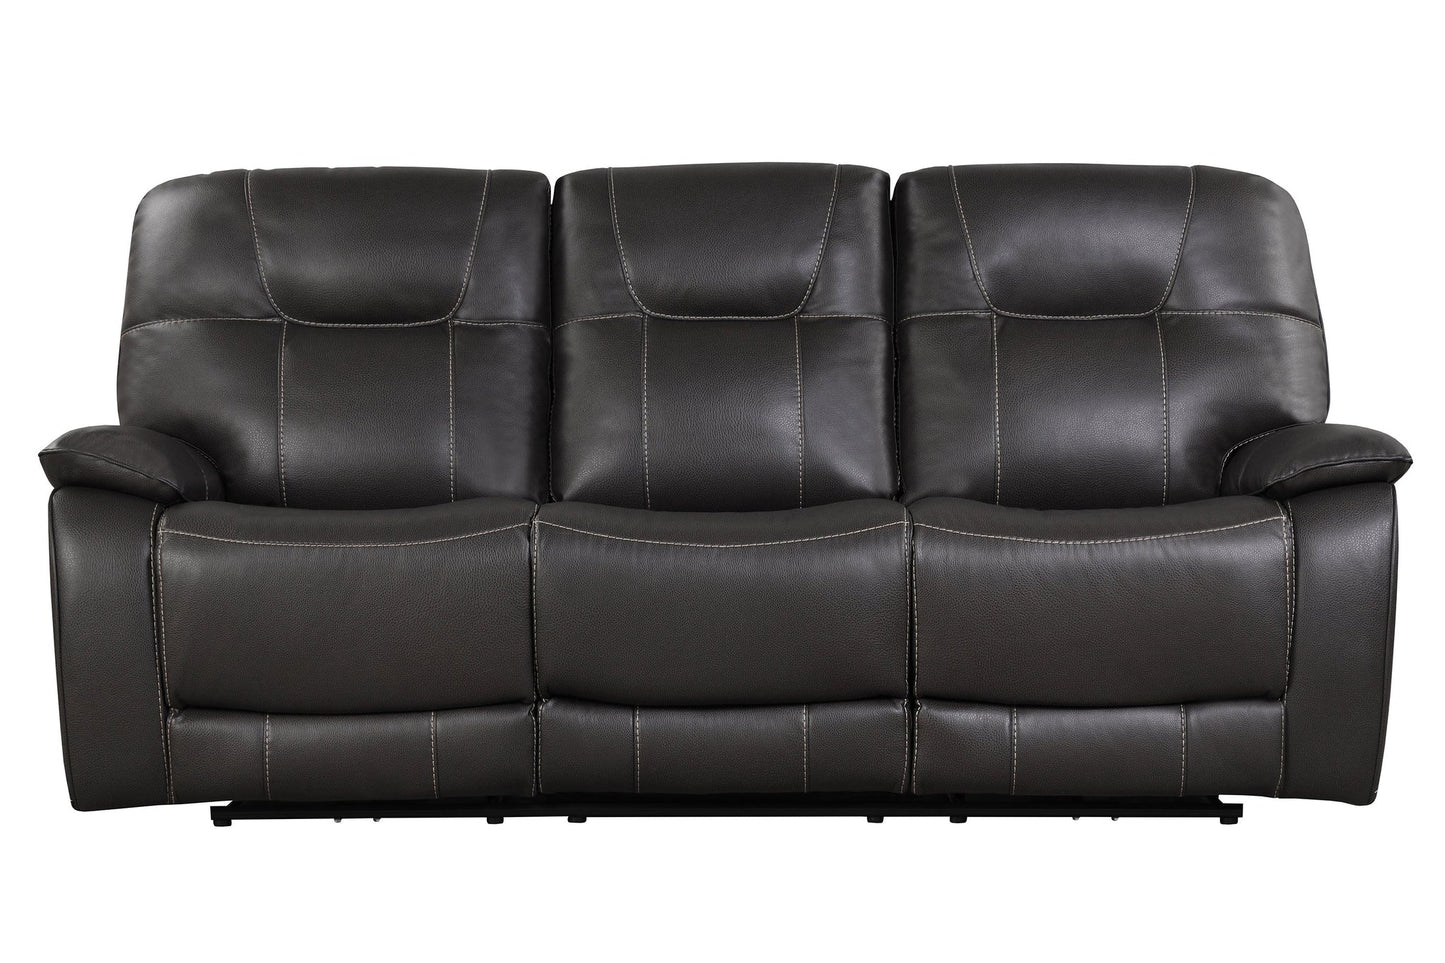 Axel Ozone Sofa, Loveseat & Chair